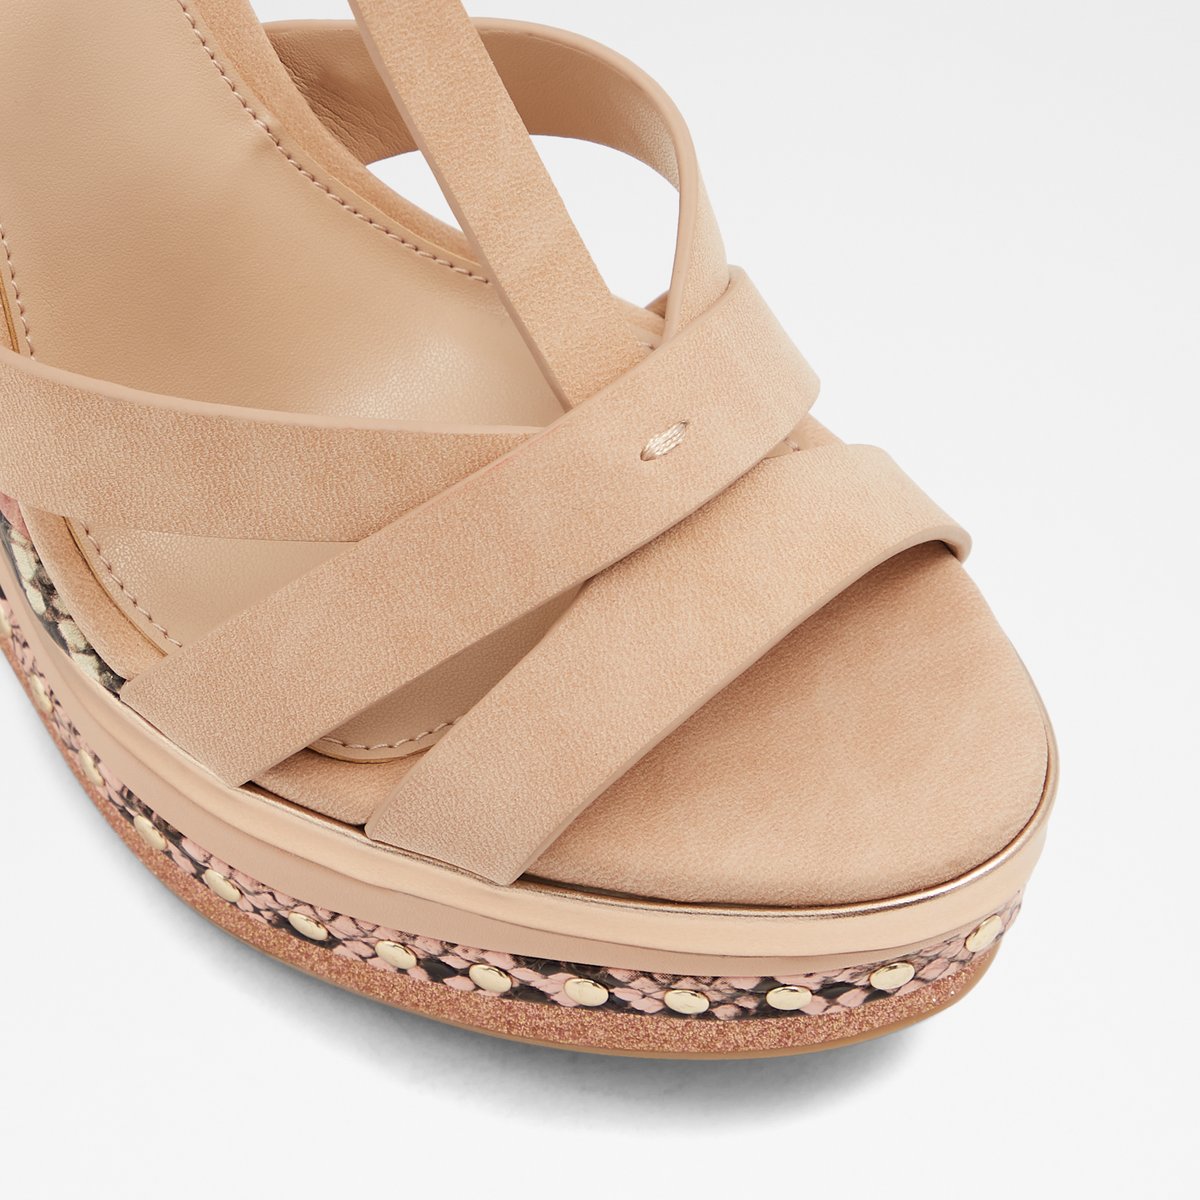 Nydaycia Brown Women's Sandals | ALDO US